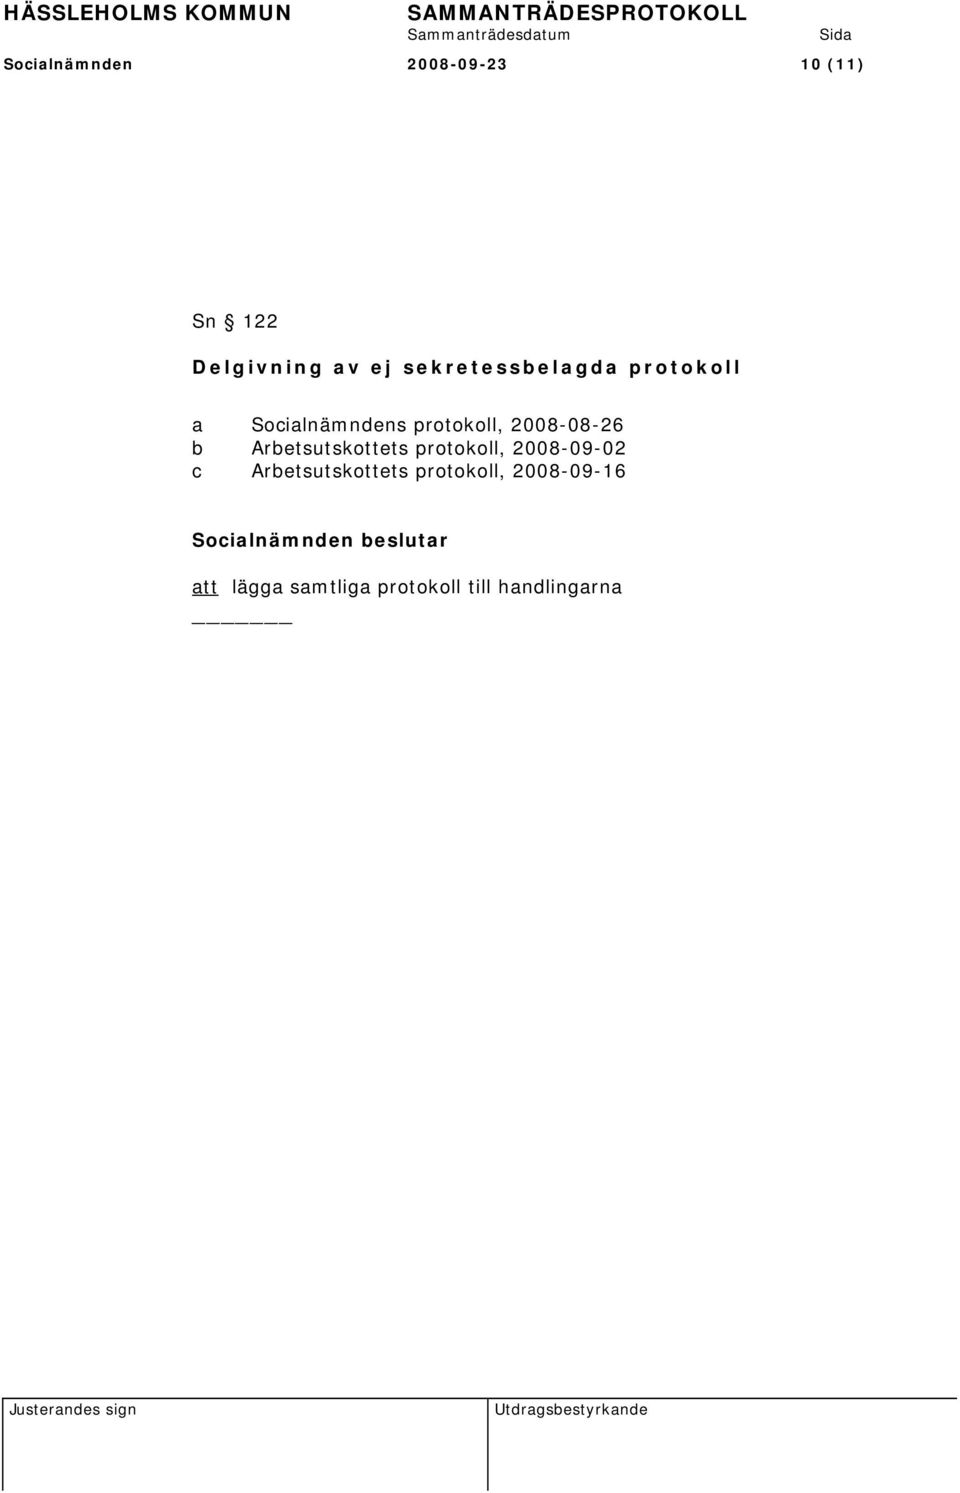 2008-08-26 b Arbetsutskottets protokoll, 2008-09-02 c